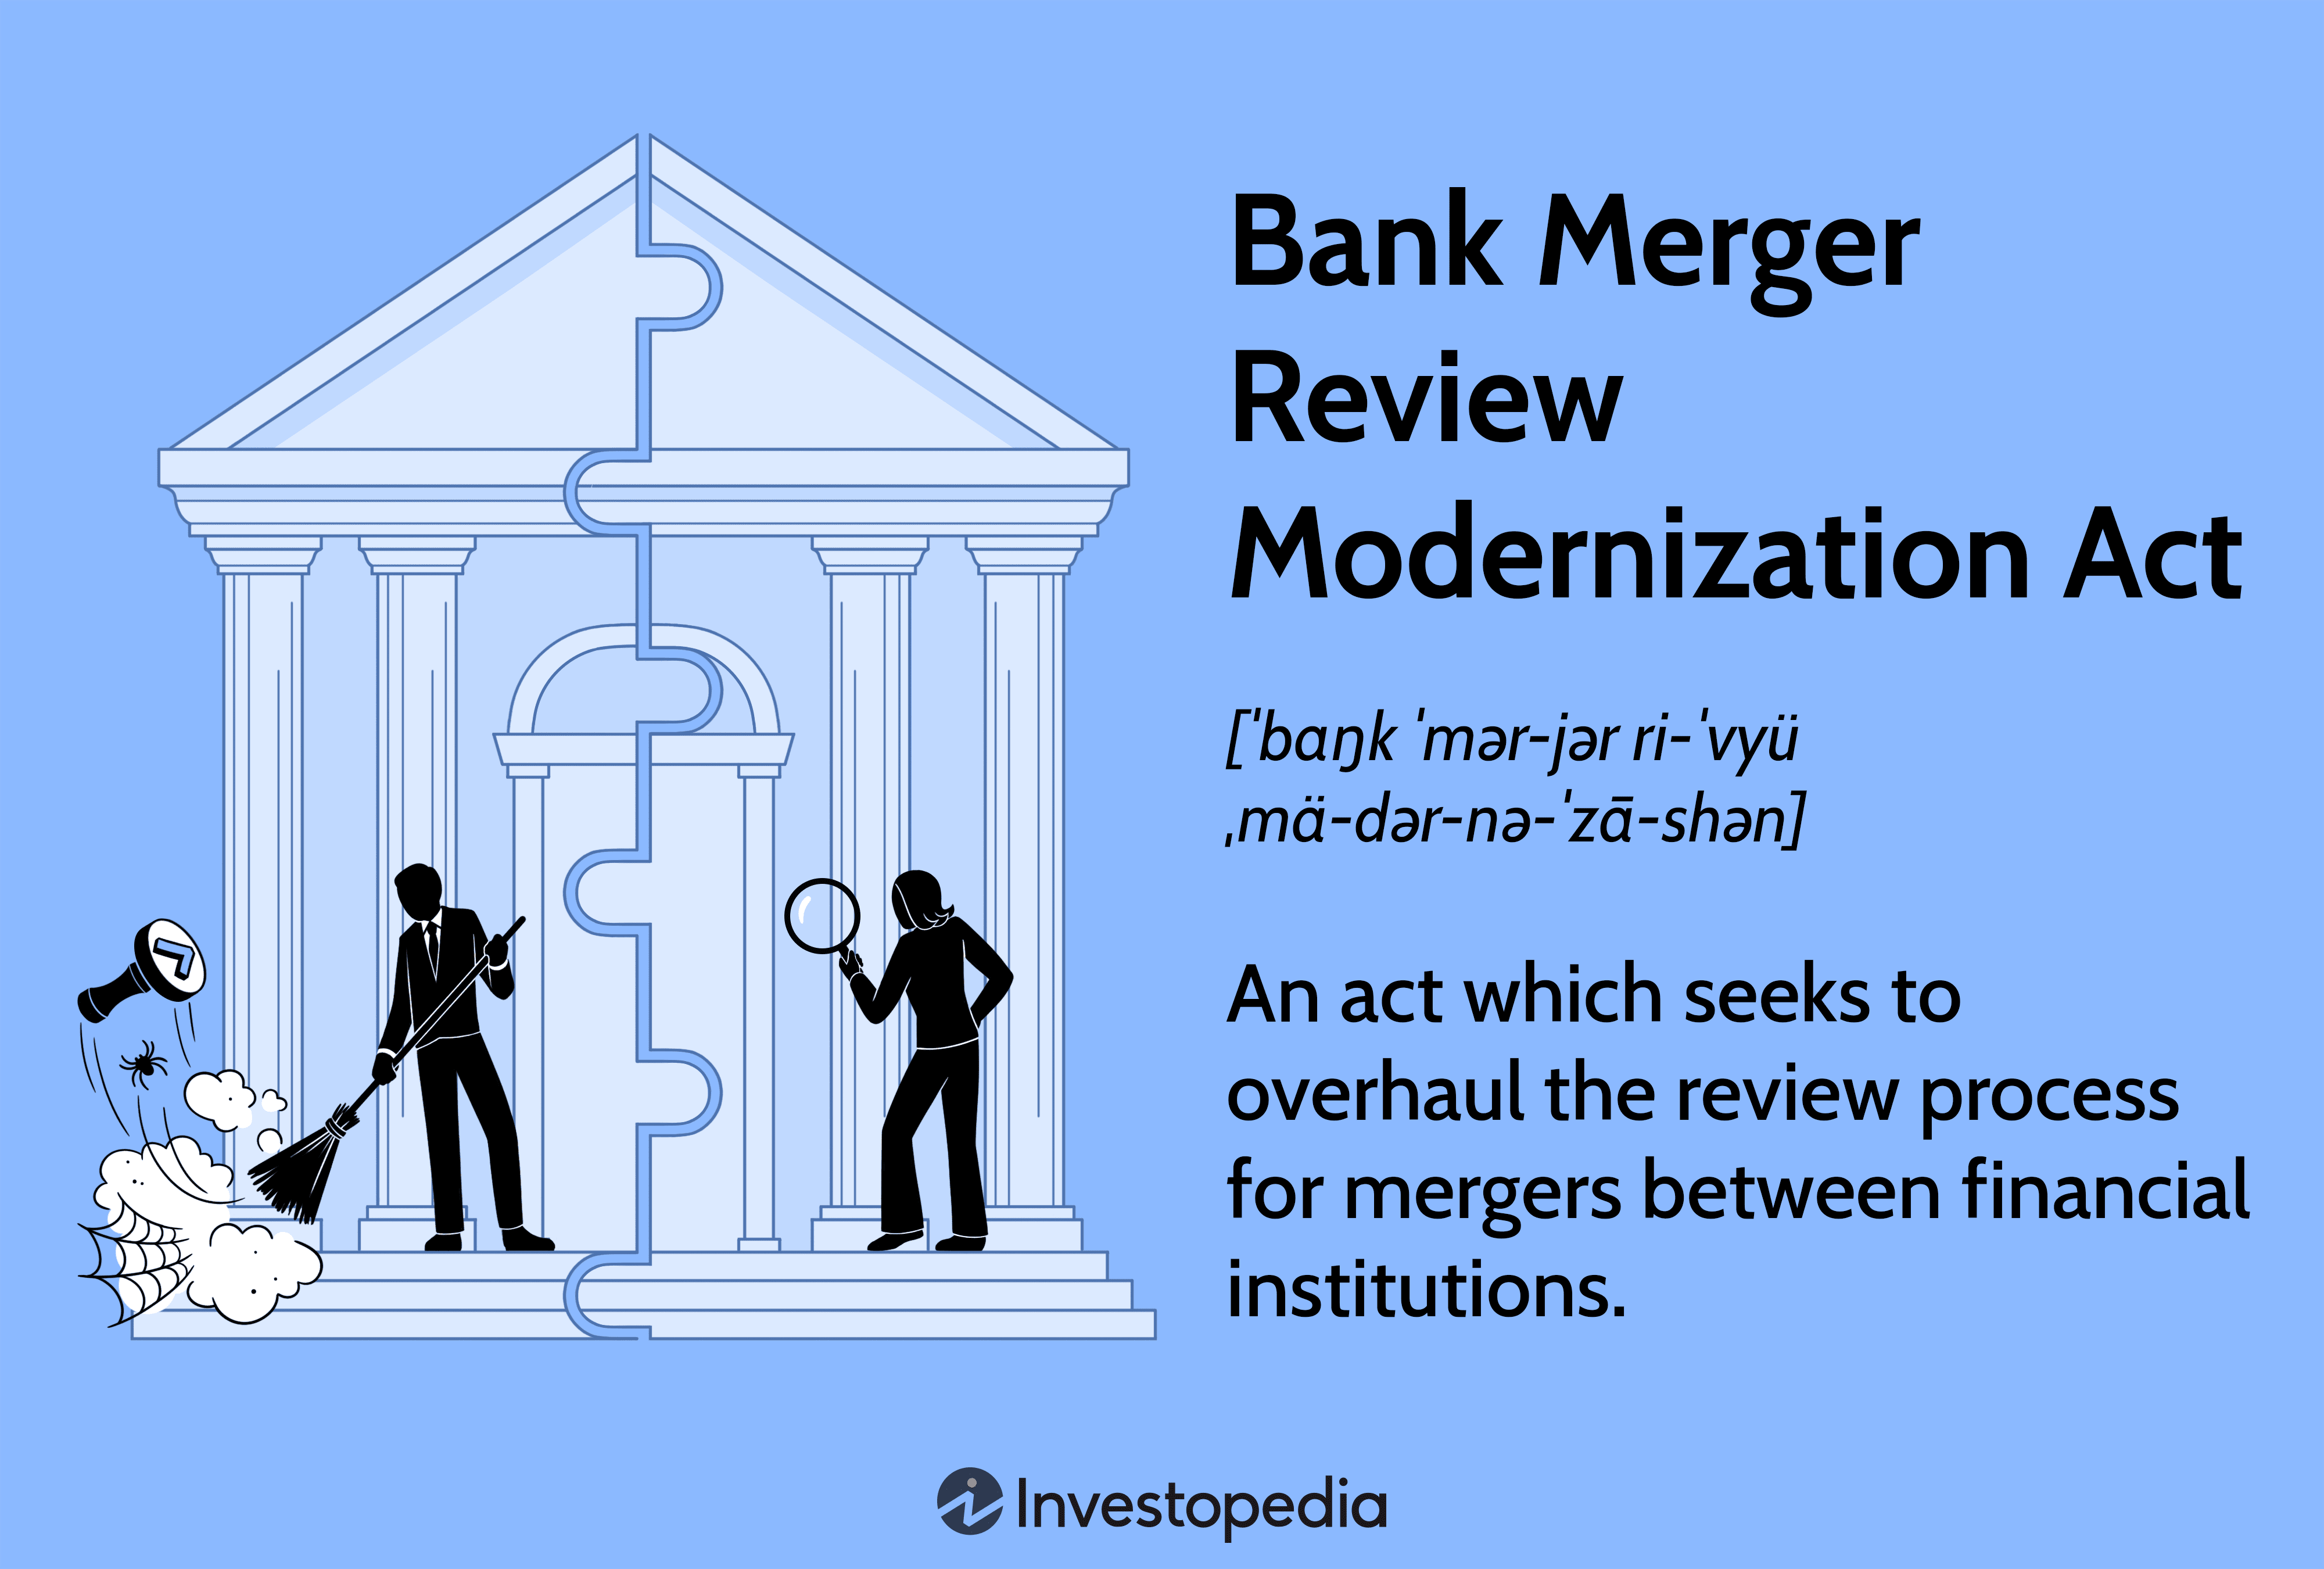 Bank Merger Review Modernization Act